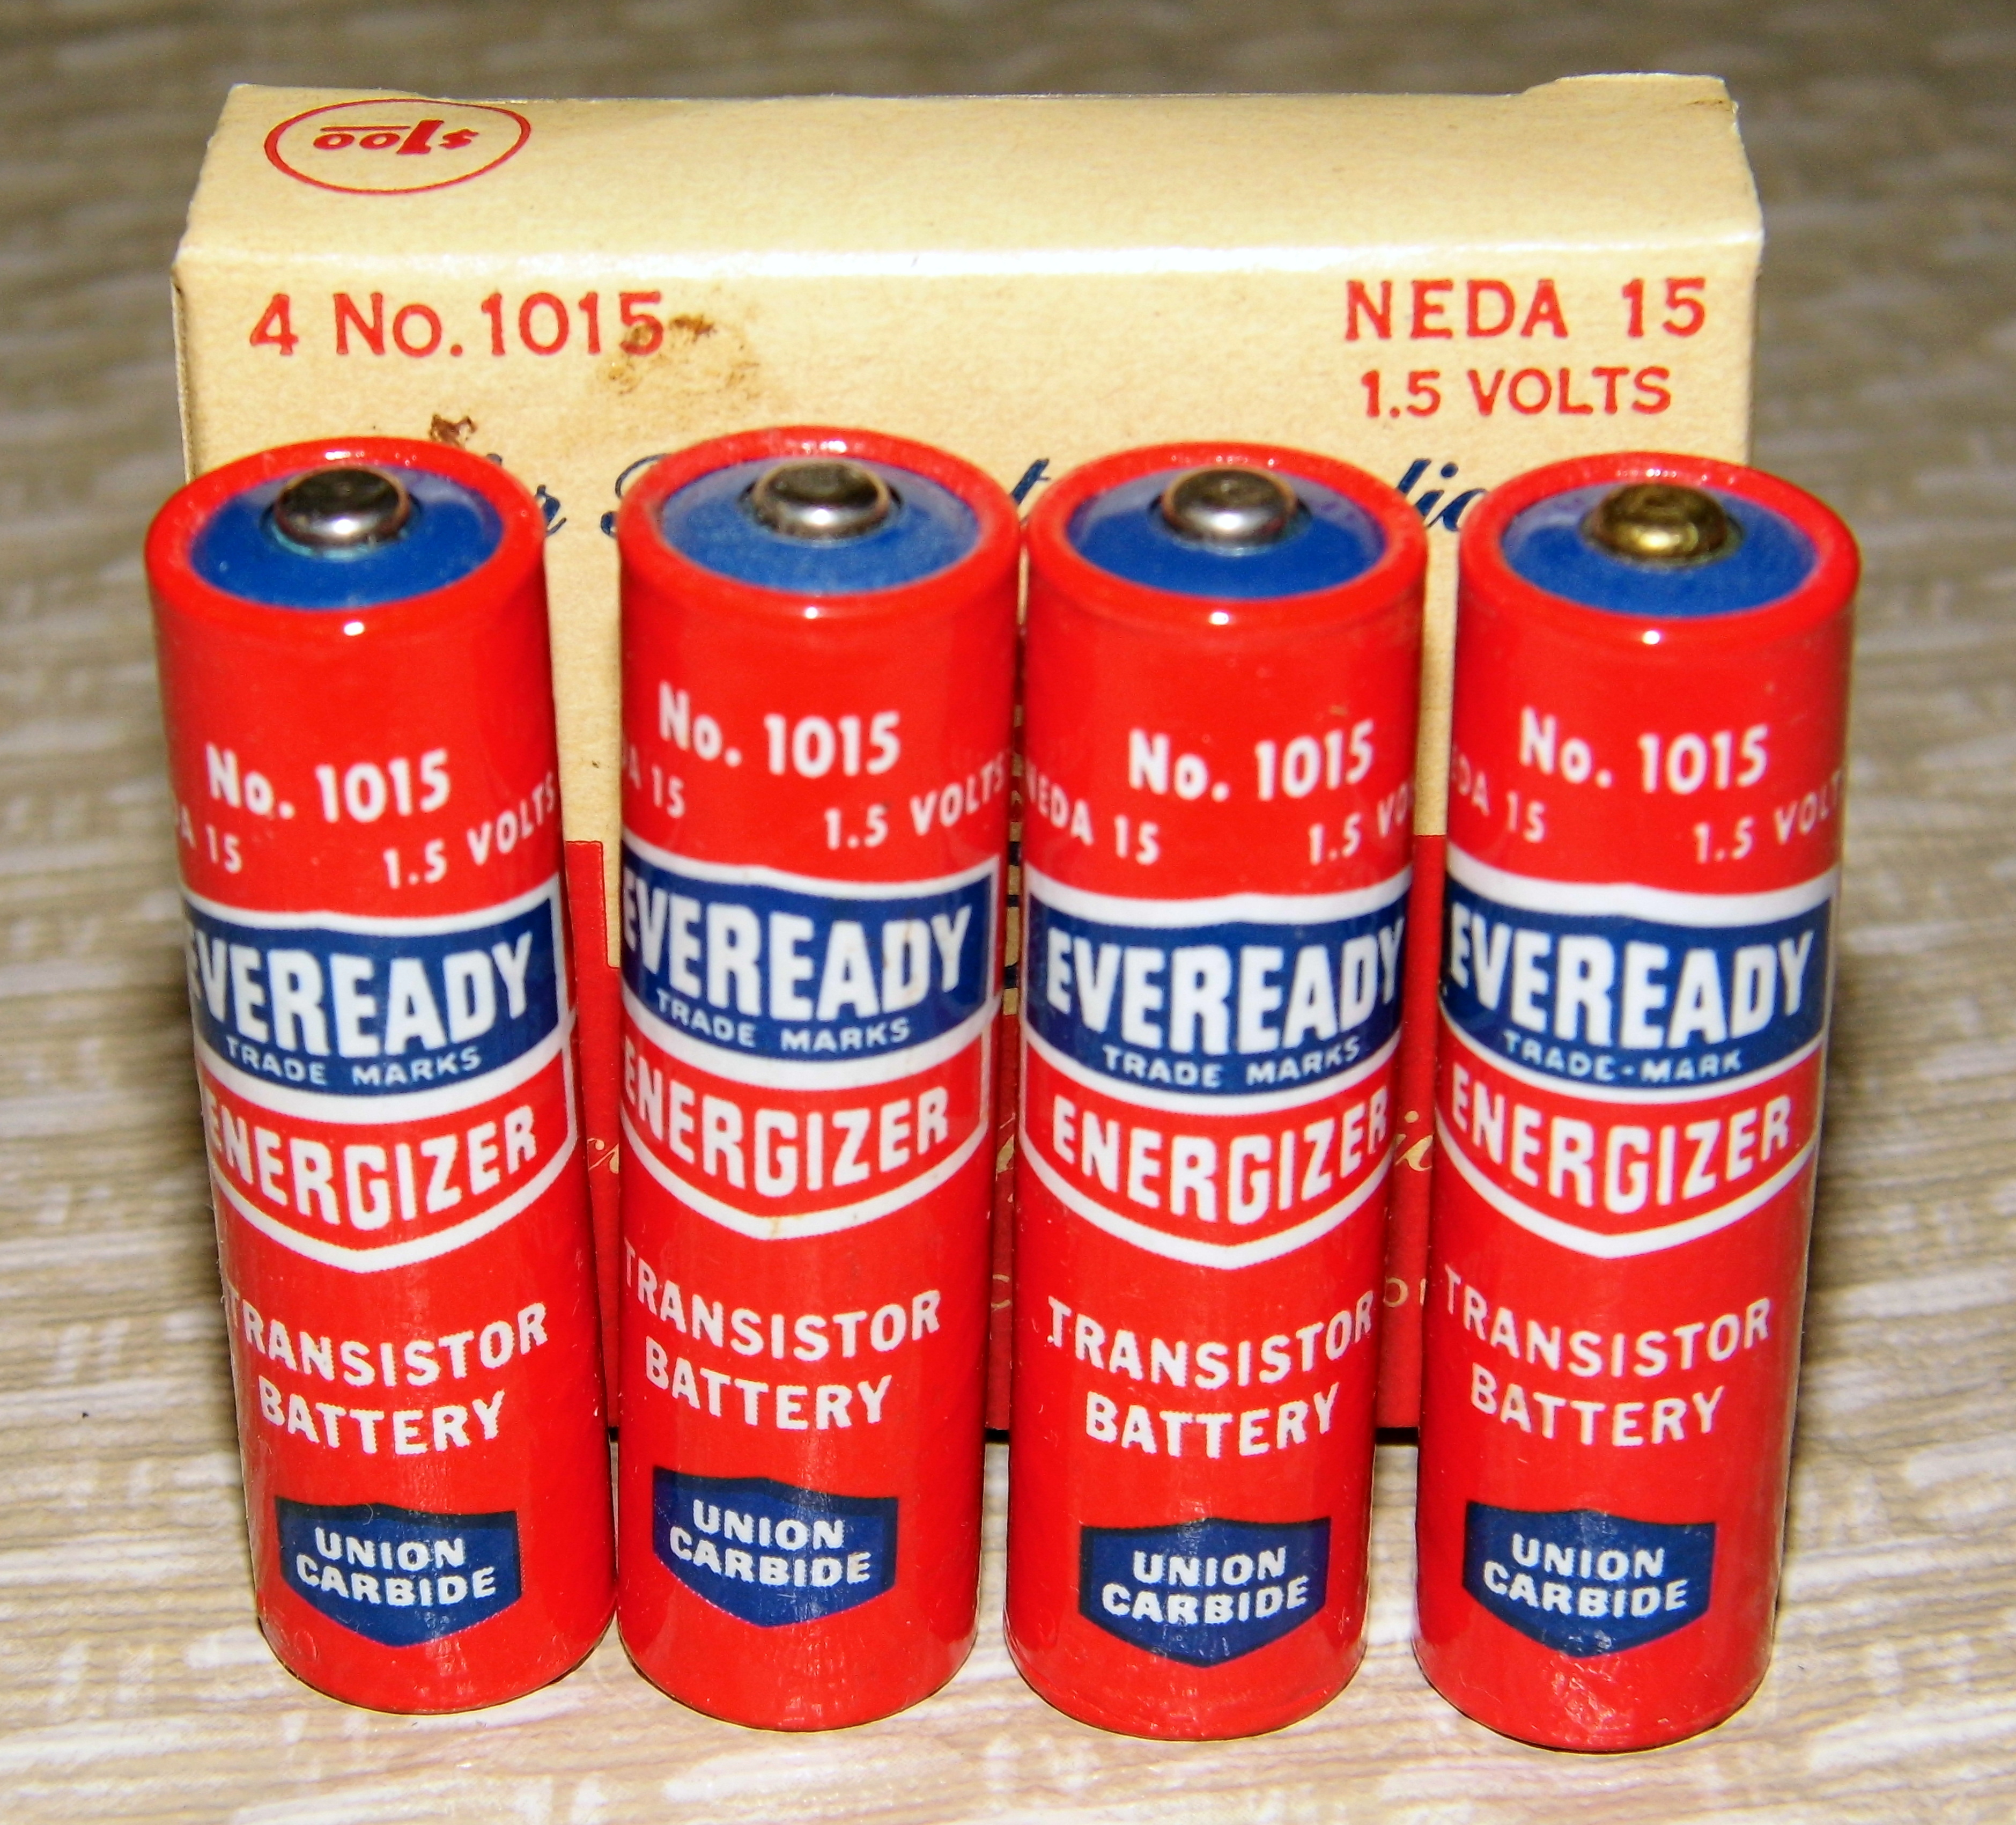 Eveready Transistor Radio Batteries, No. 1015, 1.5 Volts - Wikimedia Commons